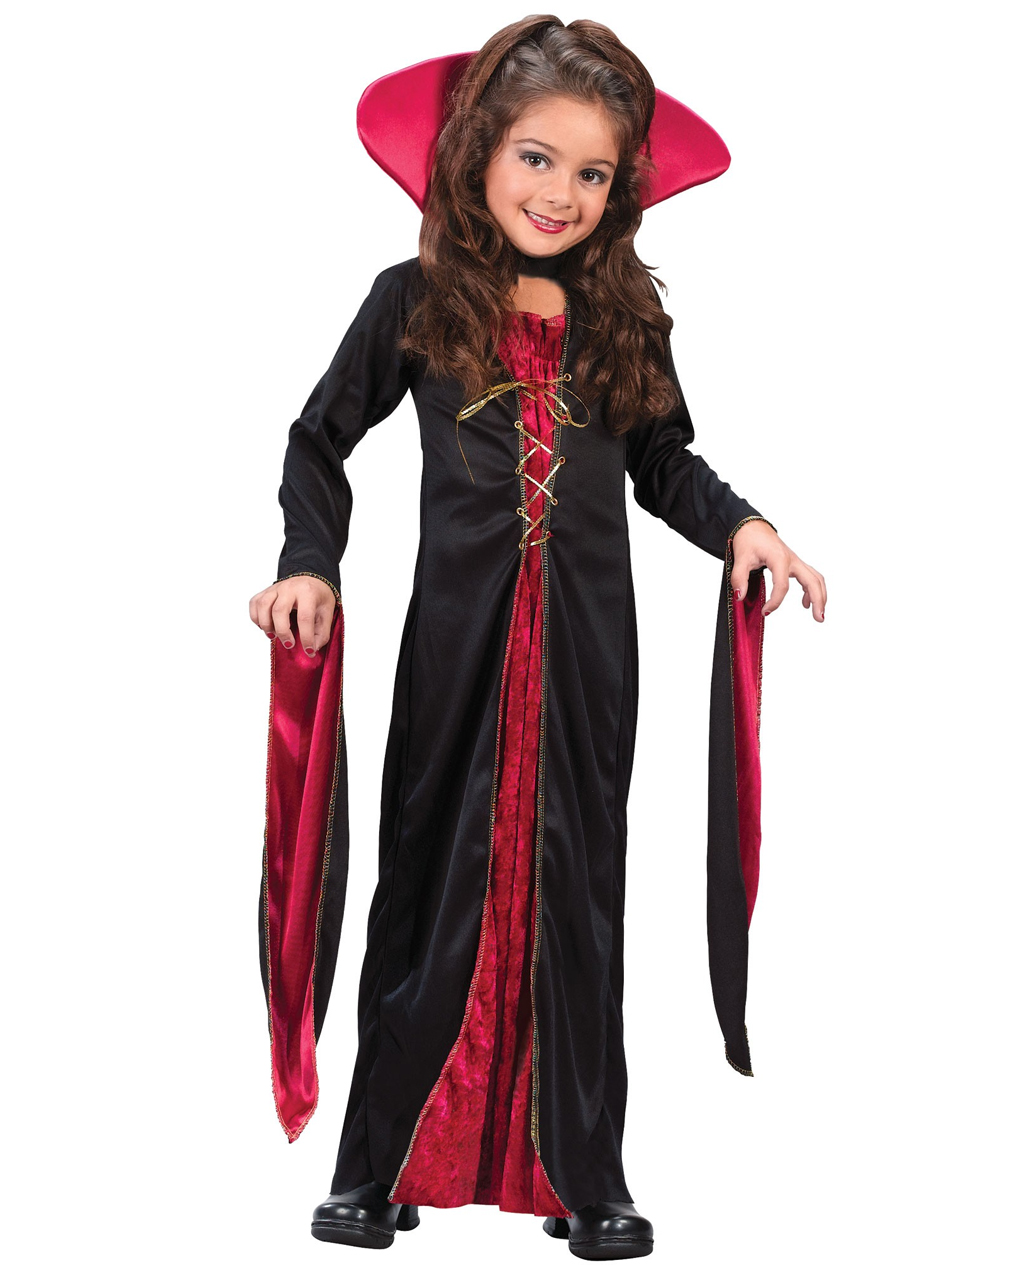 Dracula-Kostüm für Mädchen Baronin Kinderkostüm Gräfin Vampir-Kostüm 127-132cm 